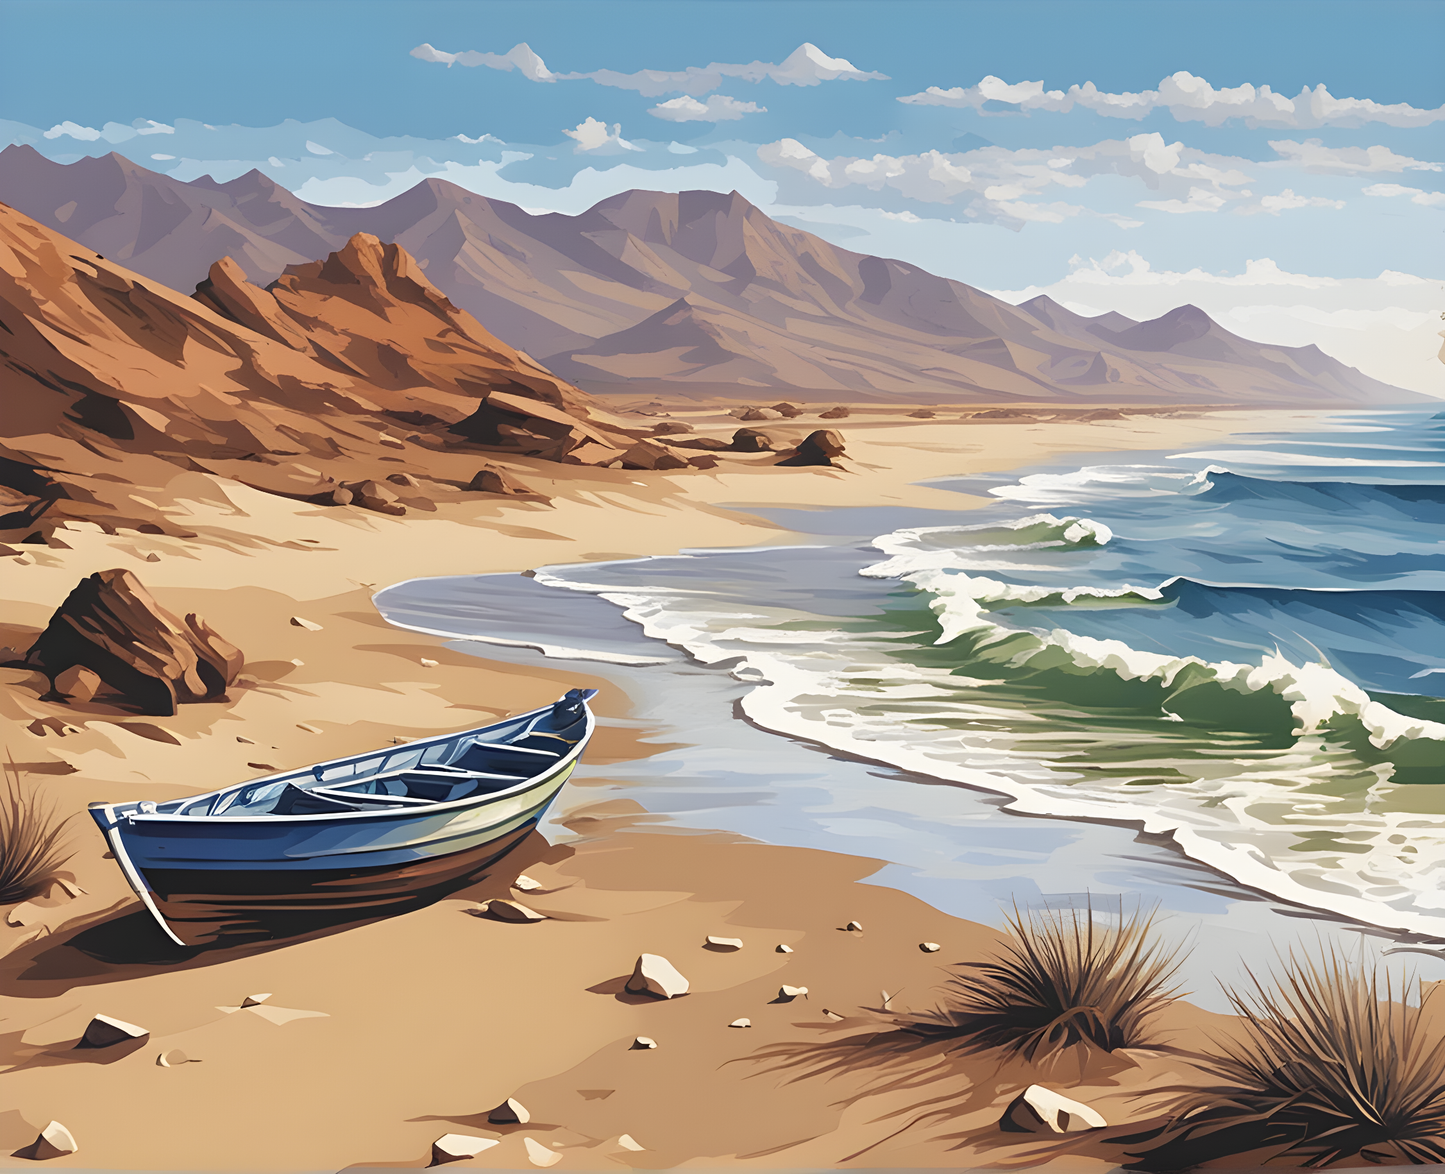 Amazing Places OD (469) - Skeleton Coast, Namibia - Van-Go Paint-By-Number Kit